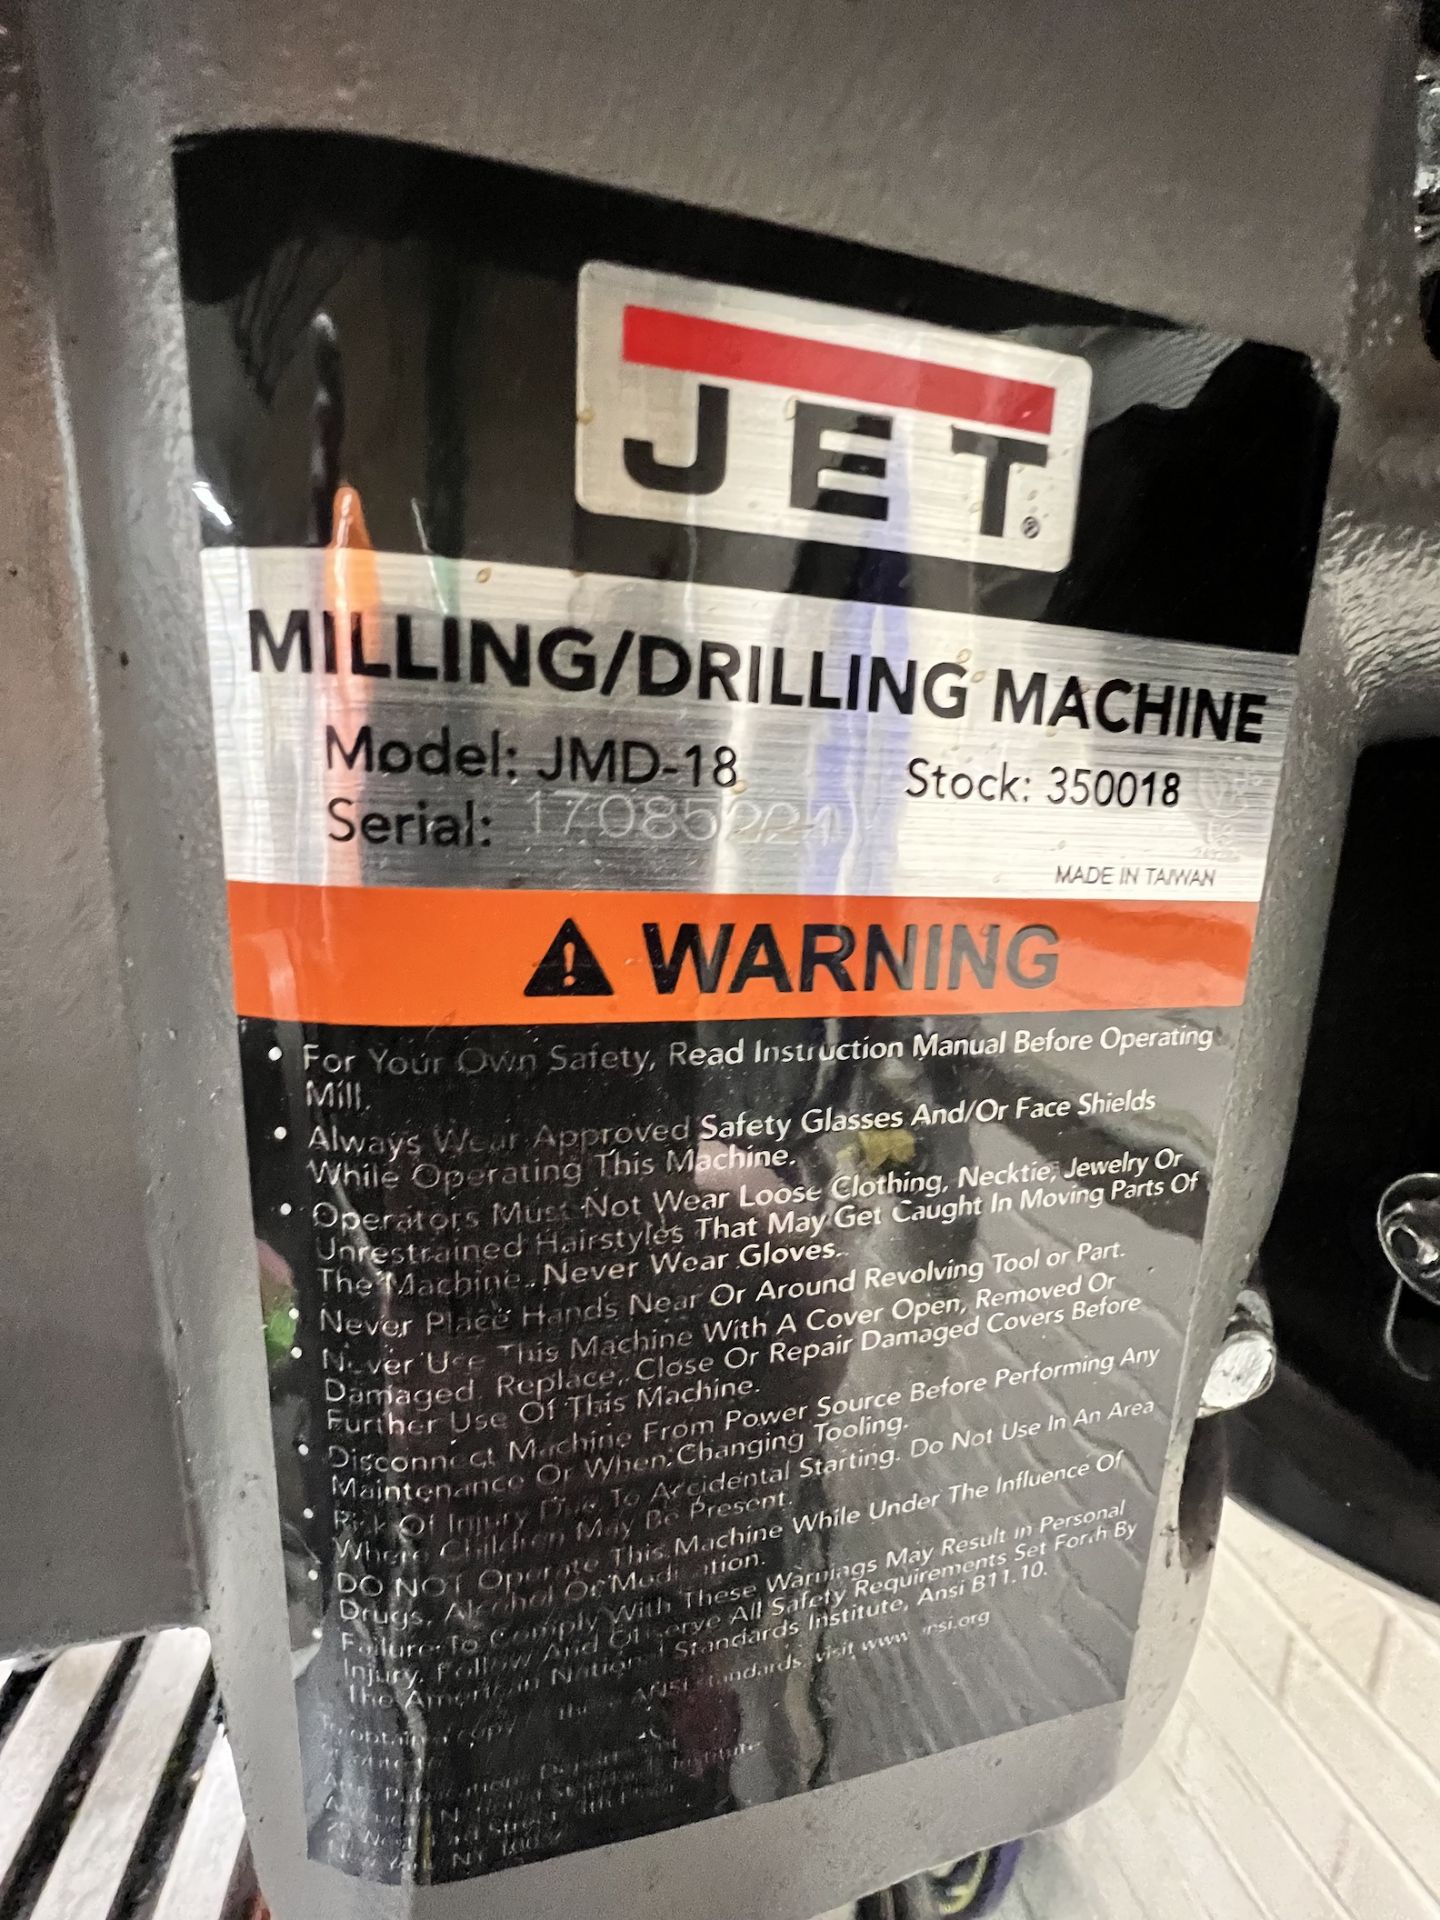 JET PEDESTAL MILLING / DRILLING MACHINE, MODEL JMD-18, S/N 17085221, STOCK 350018 - Image 3 of 6